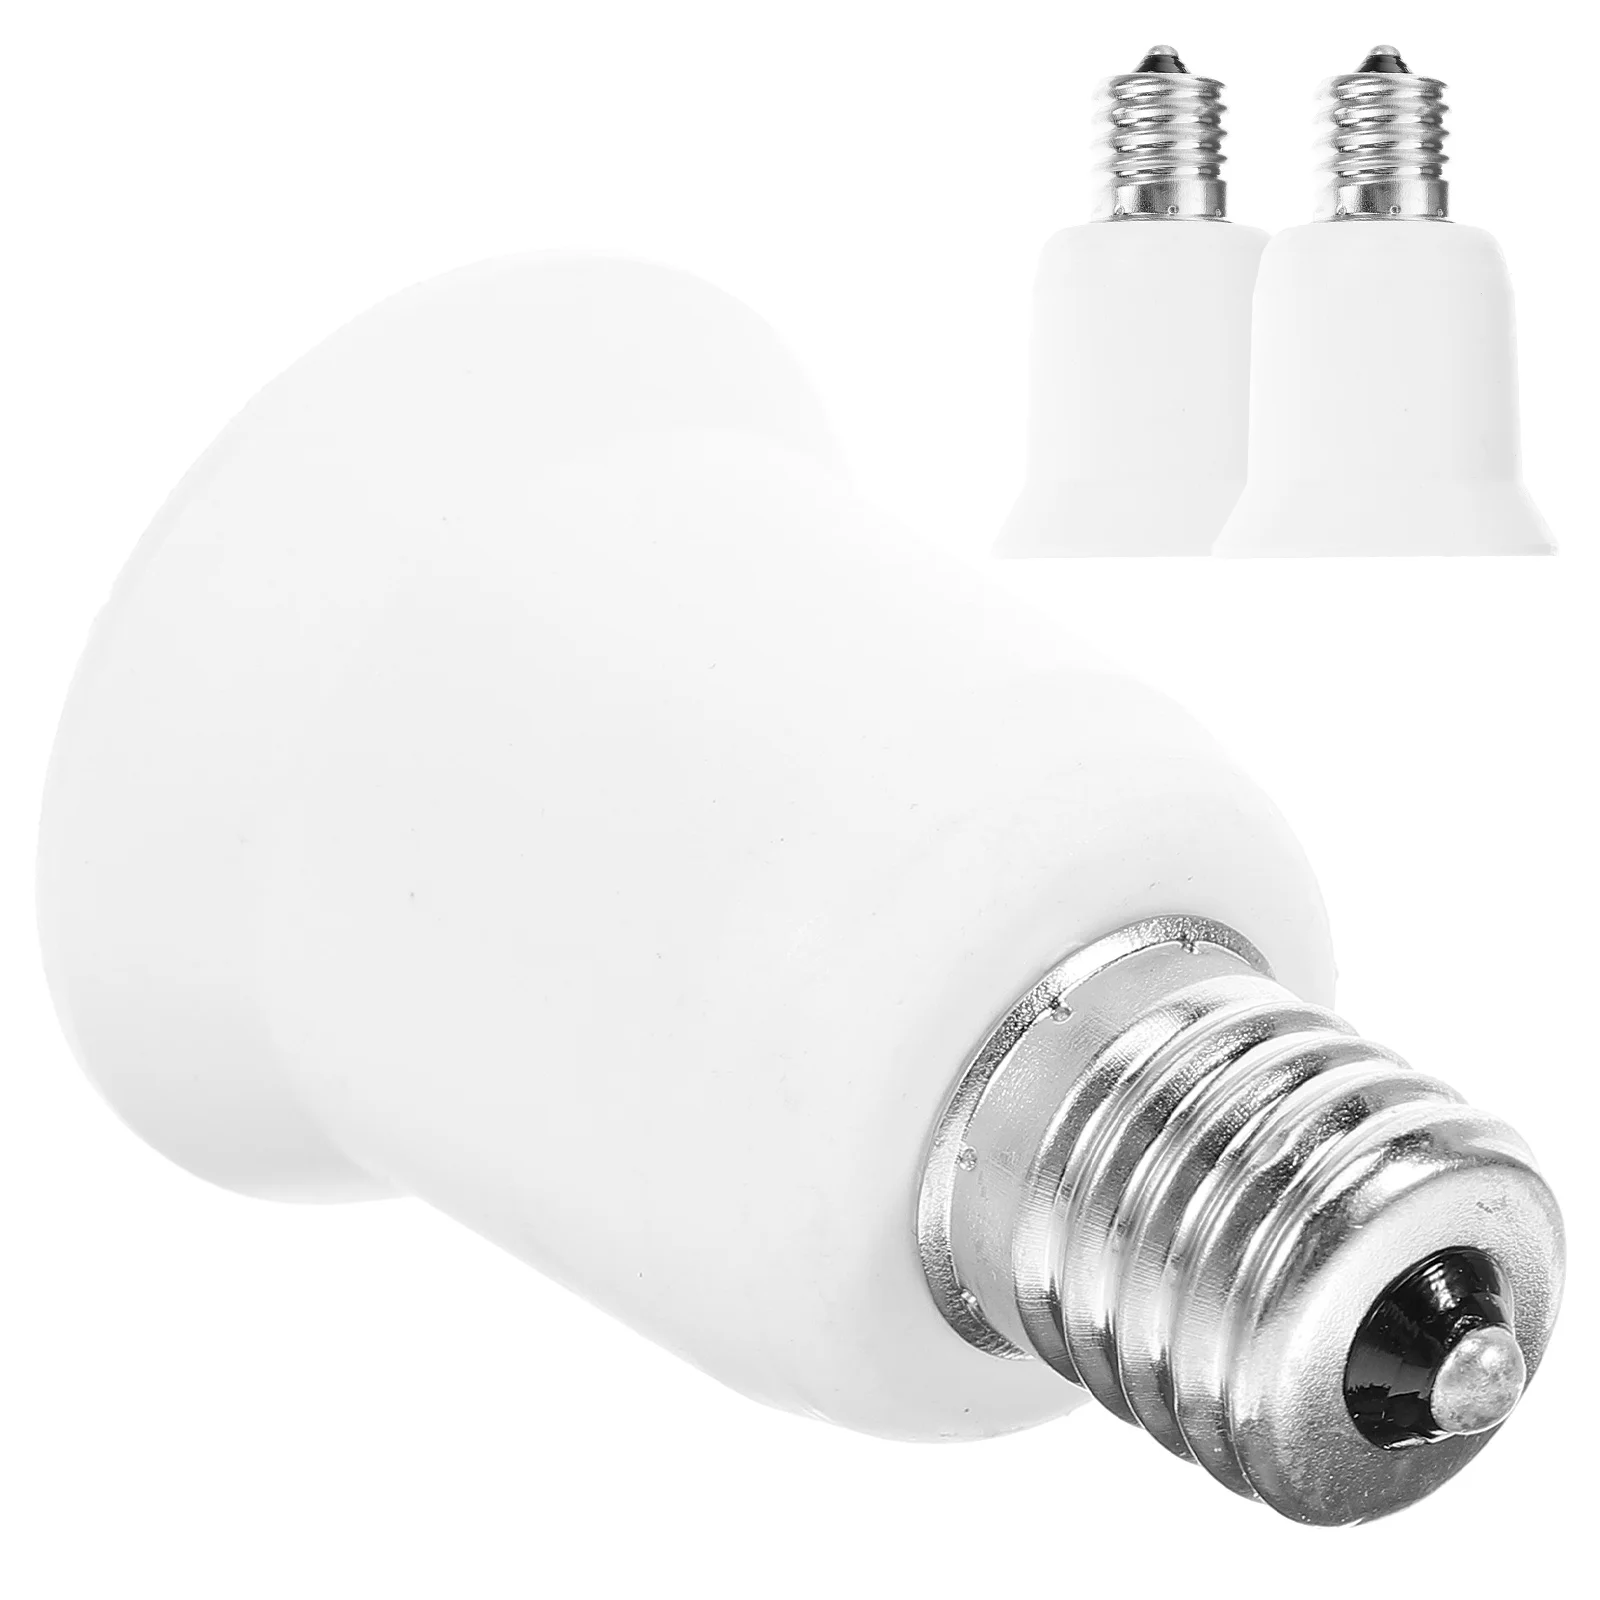 

3pcs Light Socket Adapters E17 To E26/E27 Lamp Base Converter Light Bulb Converters